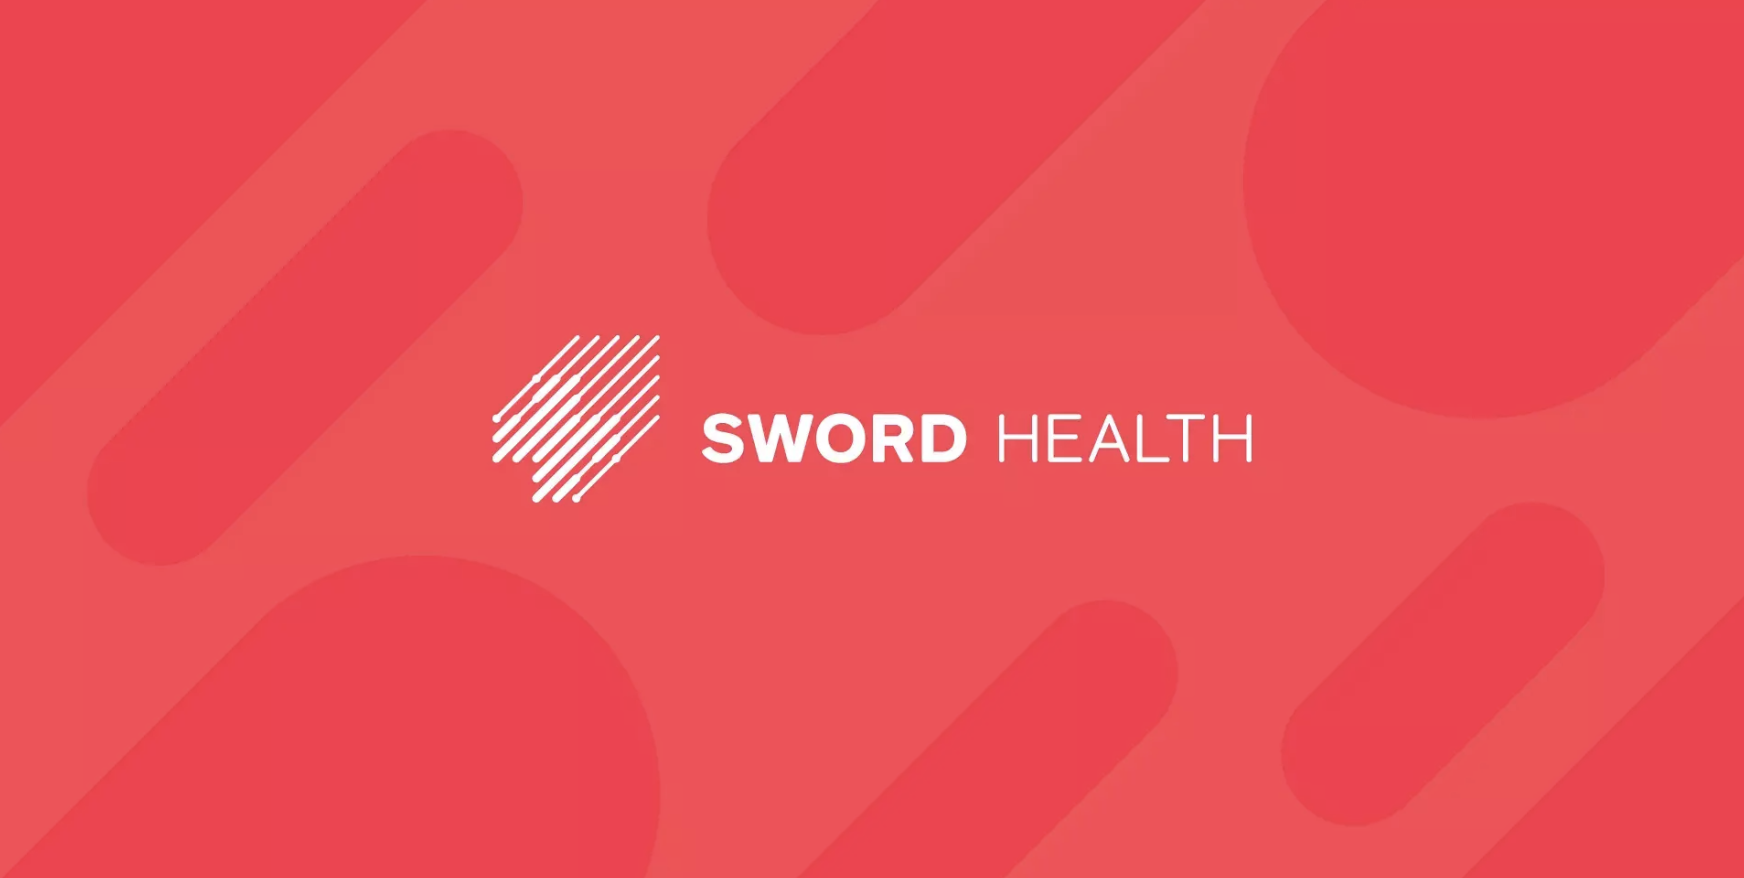 Sword Health raises $25 million